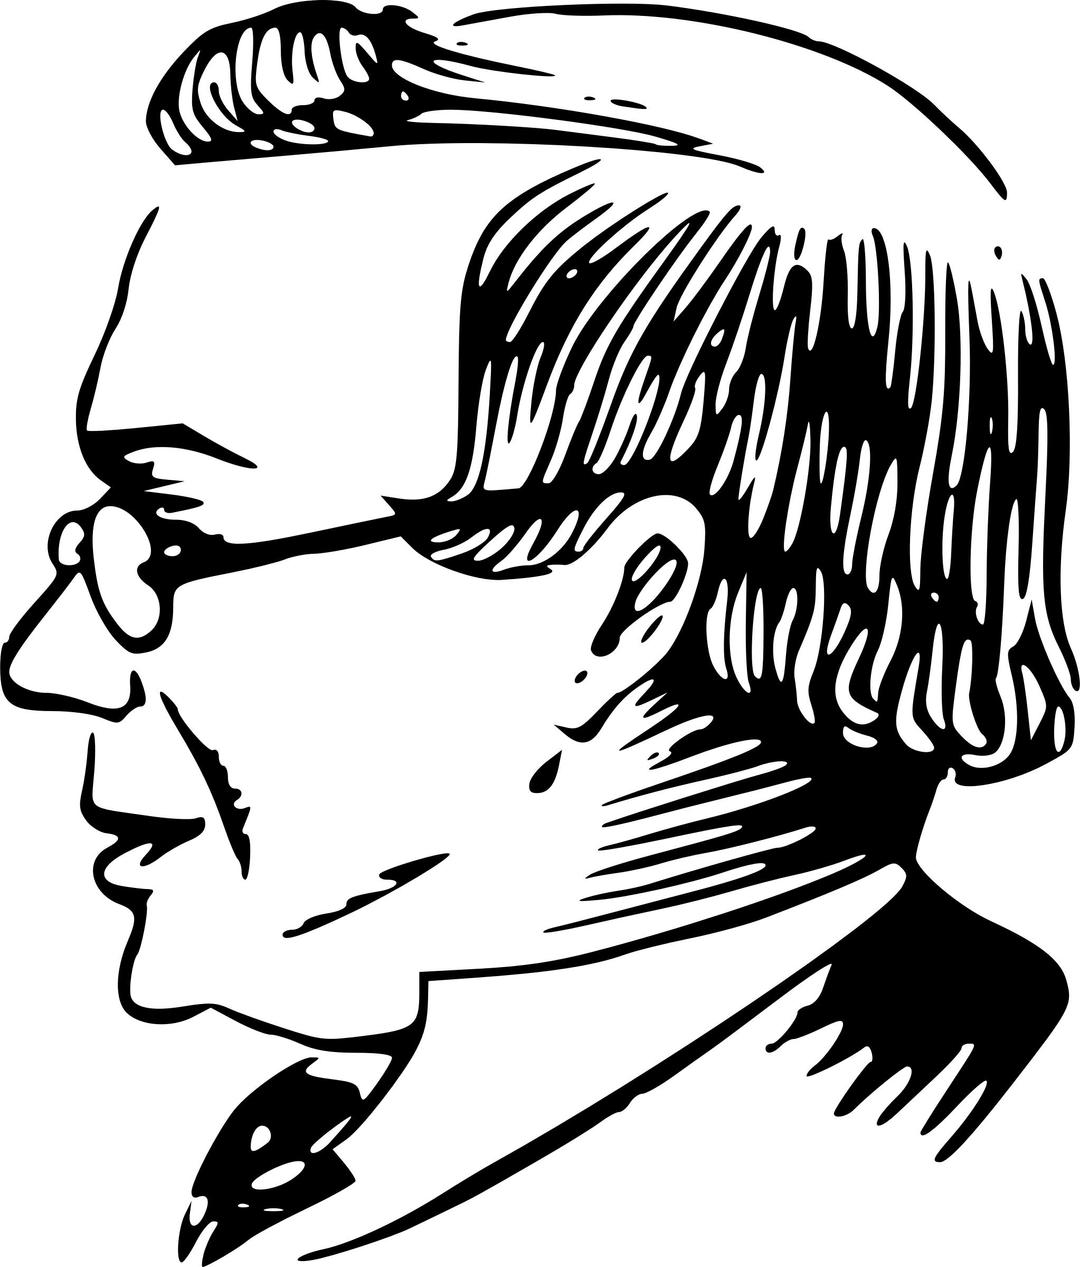 Lehrer - Male Head Profile png transparent